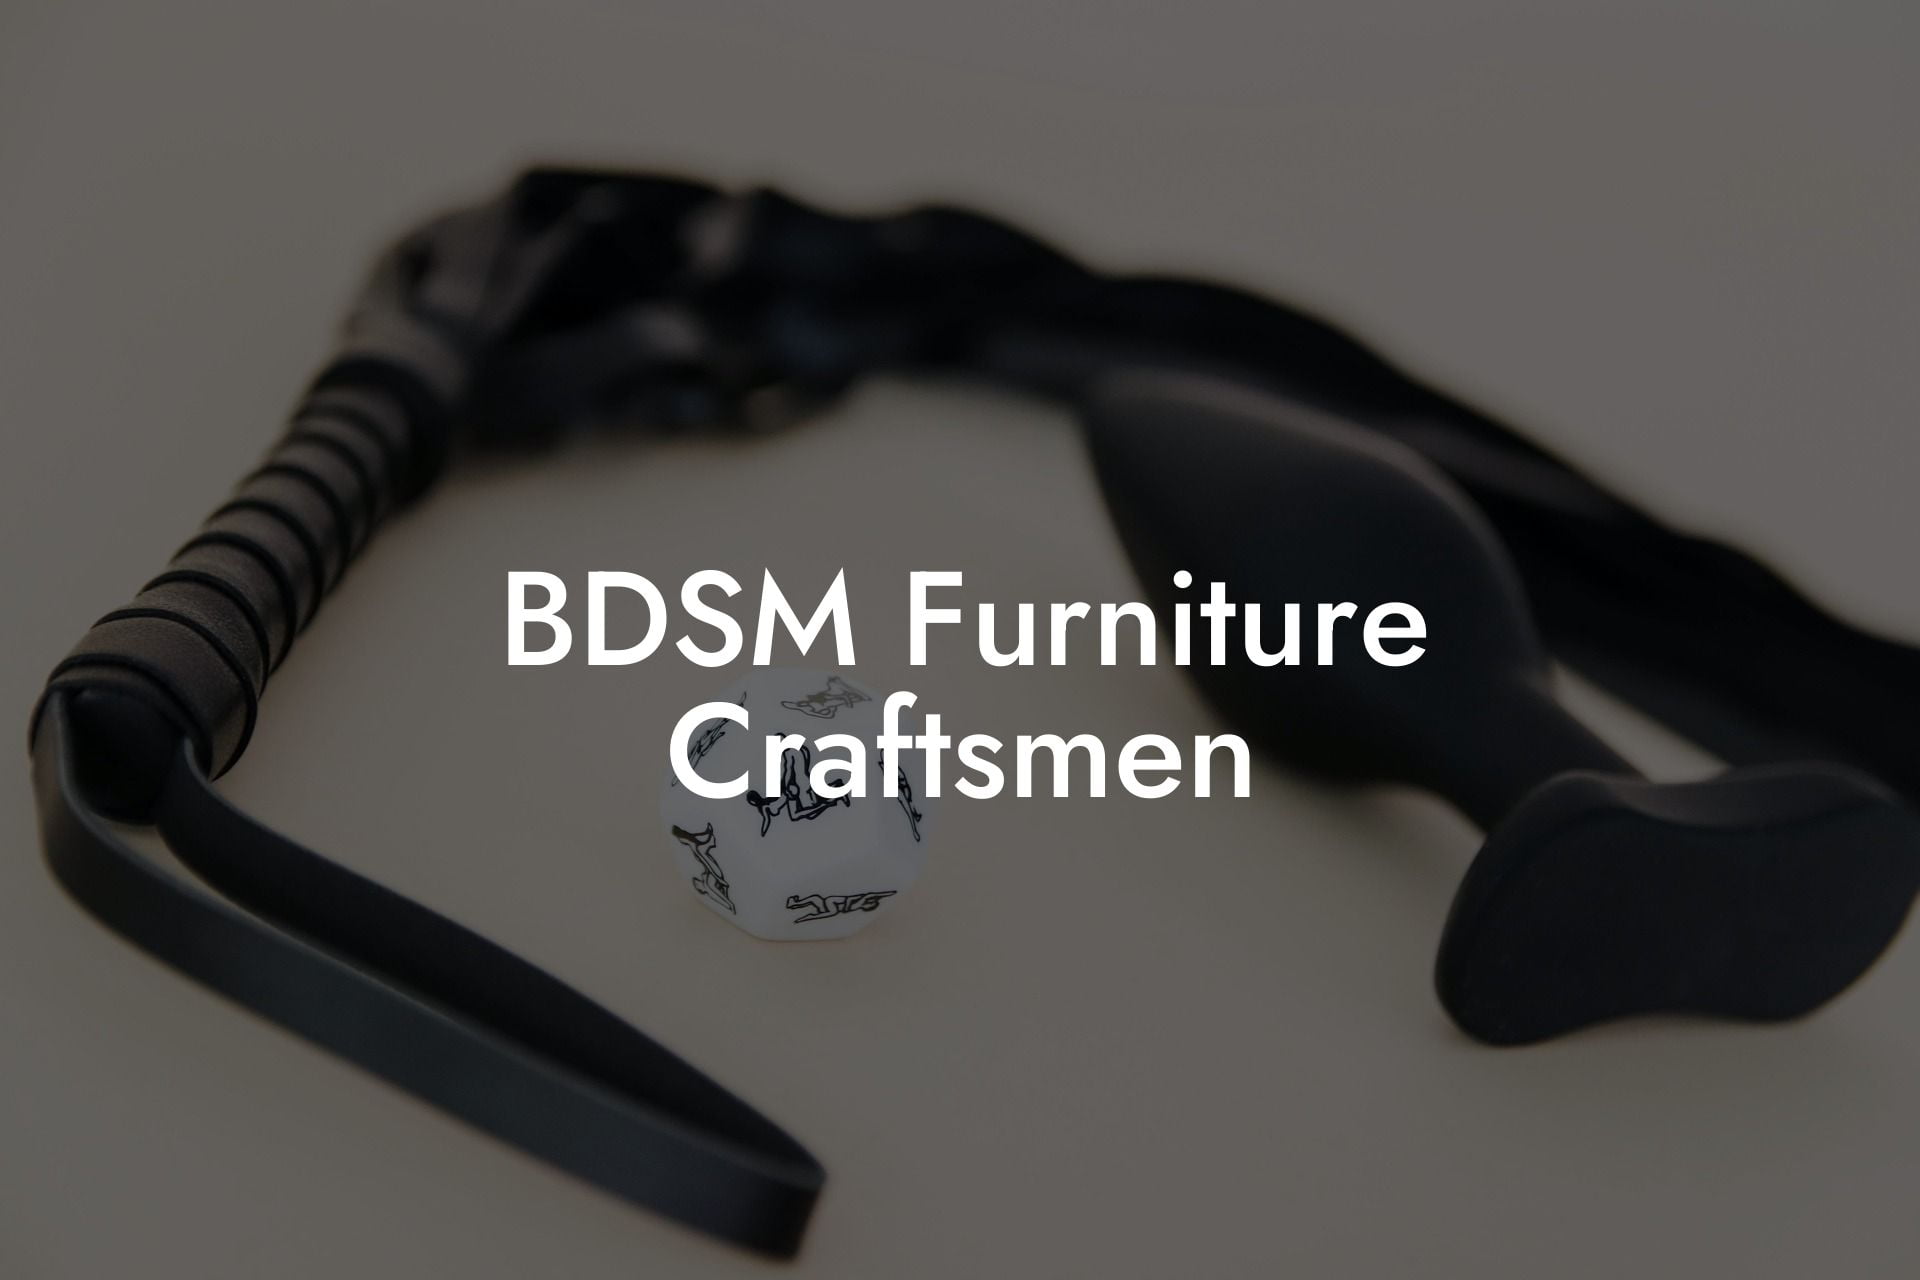 BDSM Furniture Craftsmen